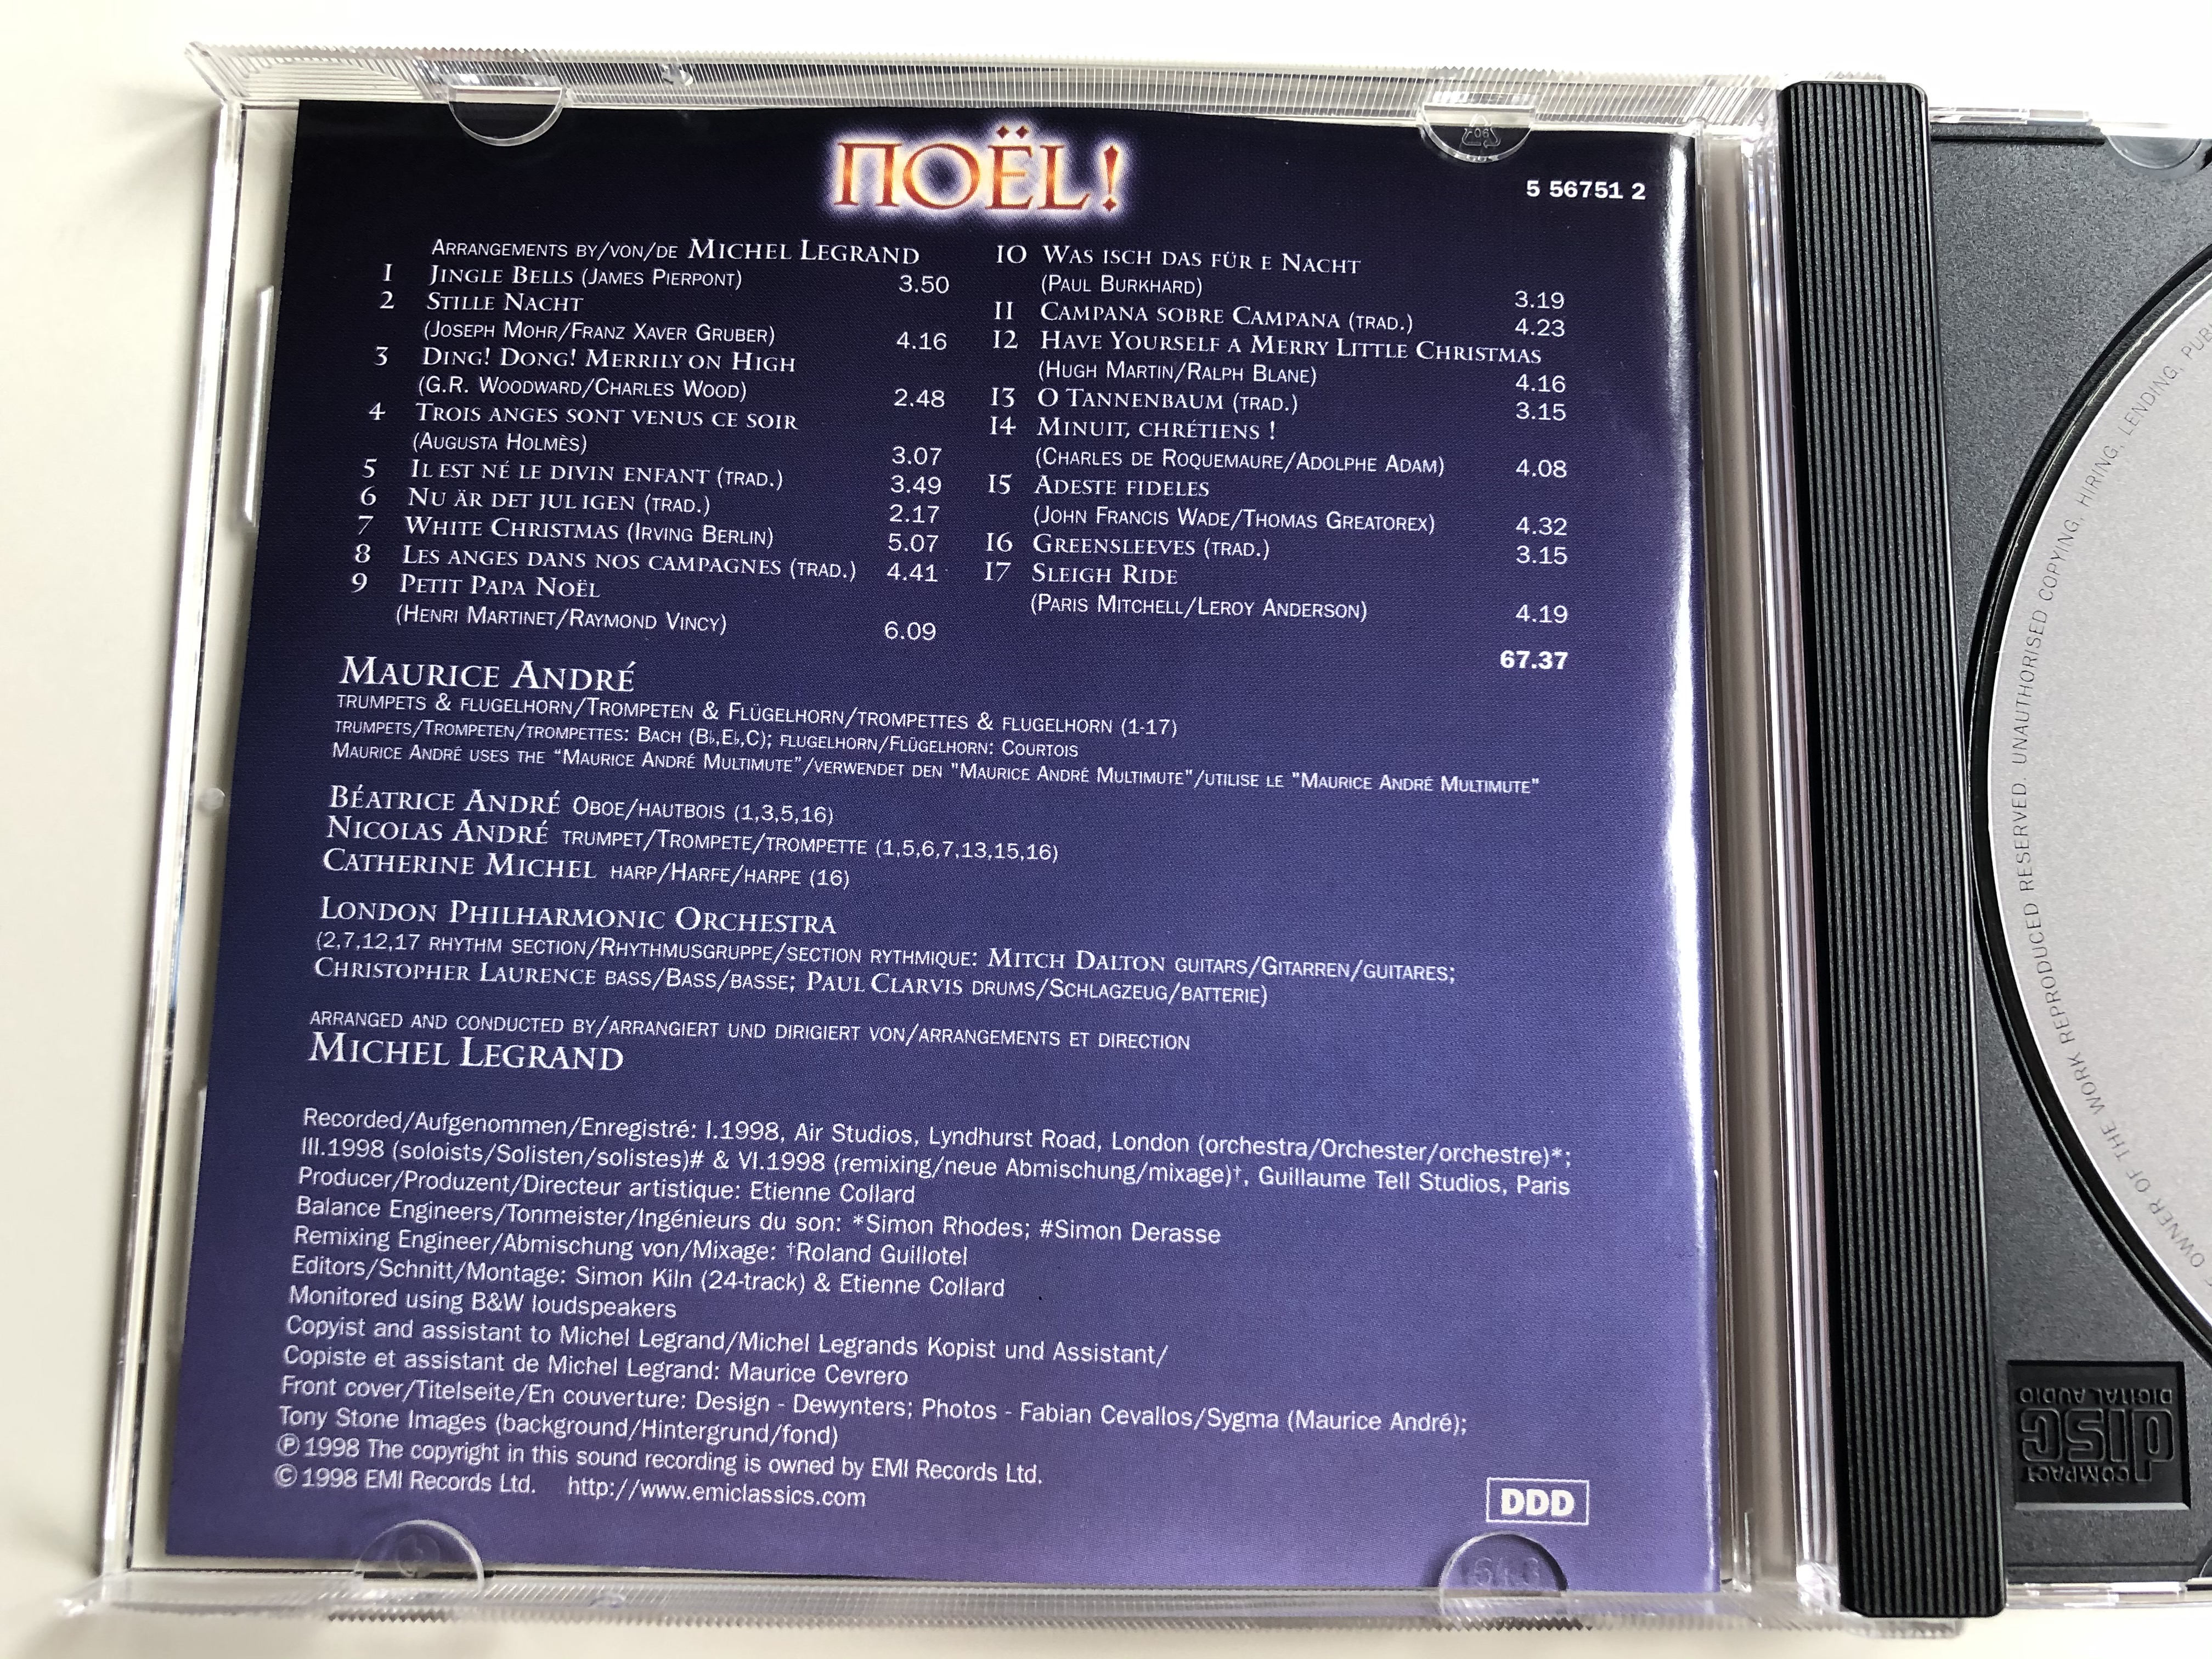 noel-maurice-andr-michel-legrand-beatrice-andre-nicolas-andre-catherine-michel-london-philharmonic-orchestra-emi-classics-audio-cd-1998-stereo-5-56751-2-5-.jpg